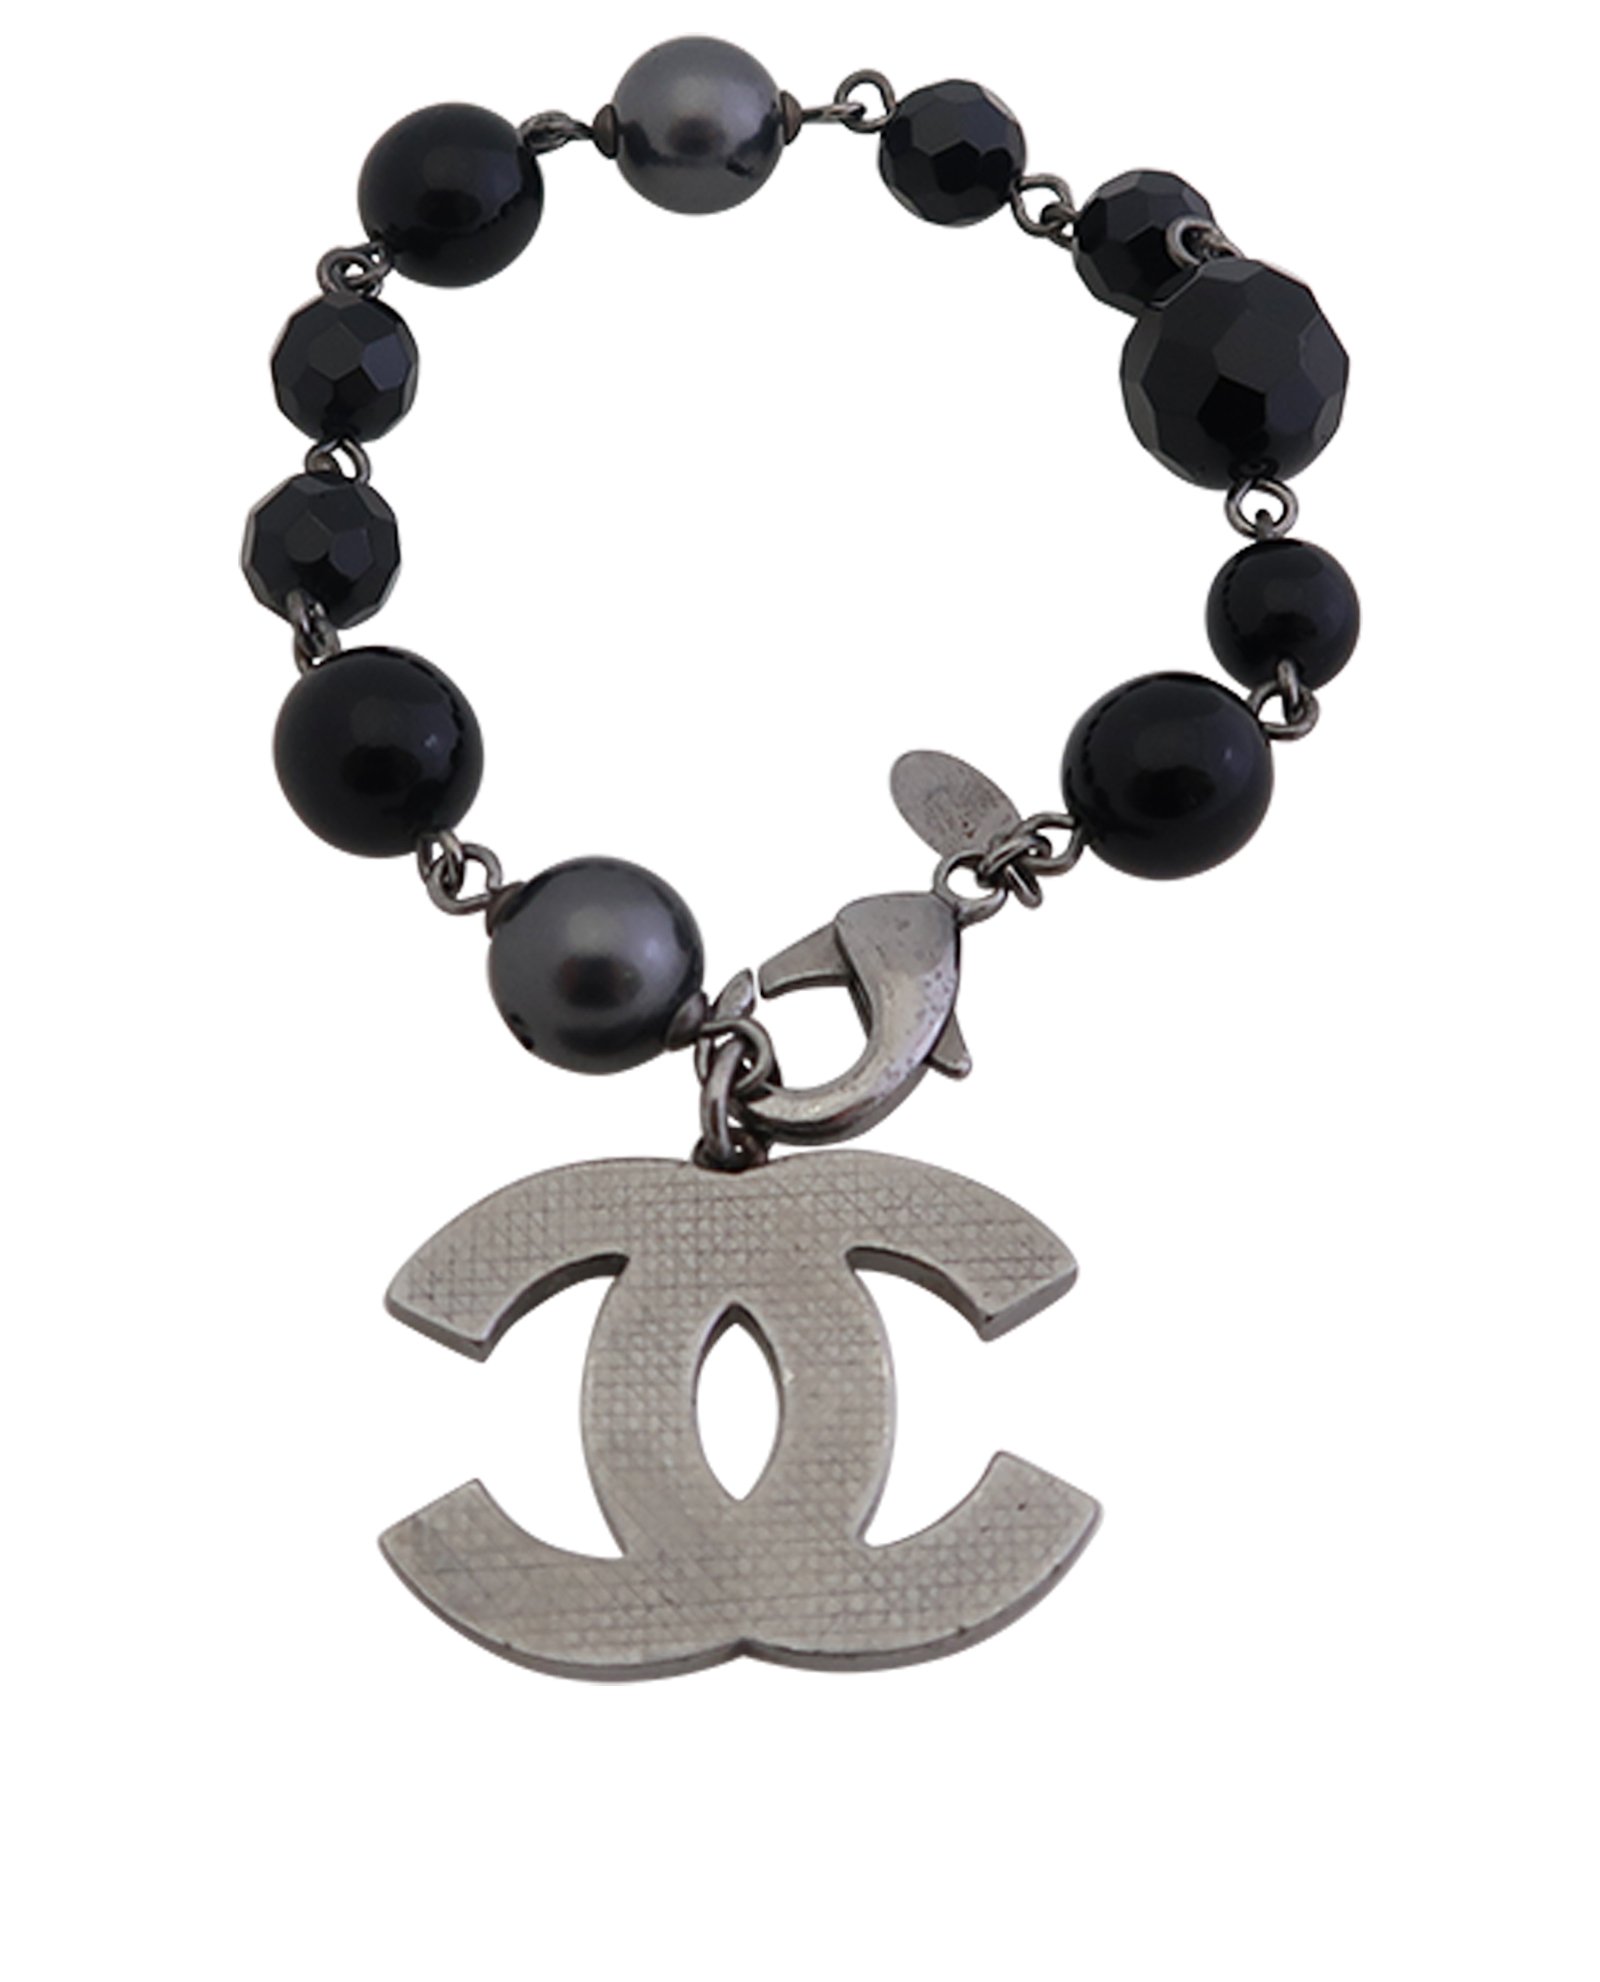 chanel cc charms for bracelets